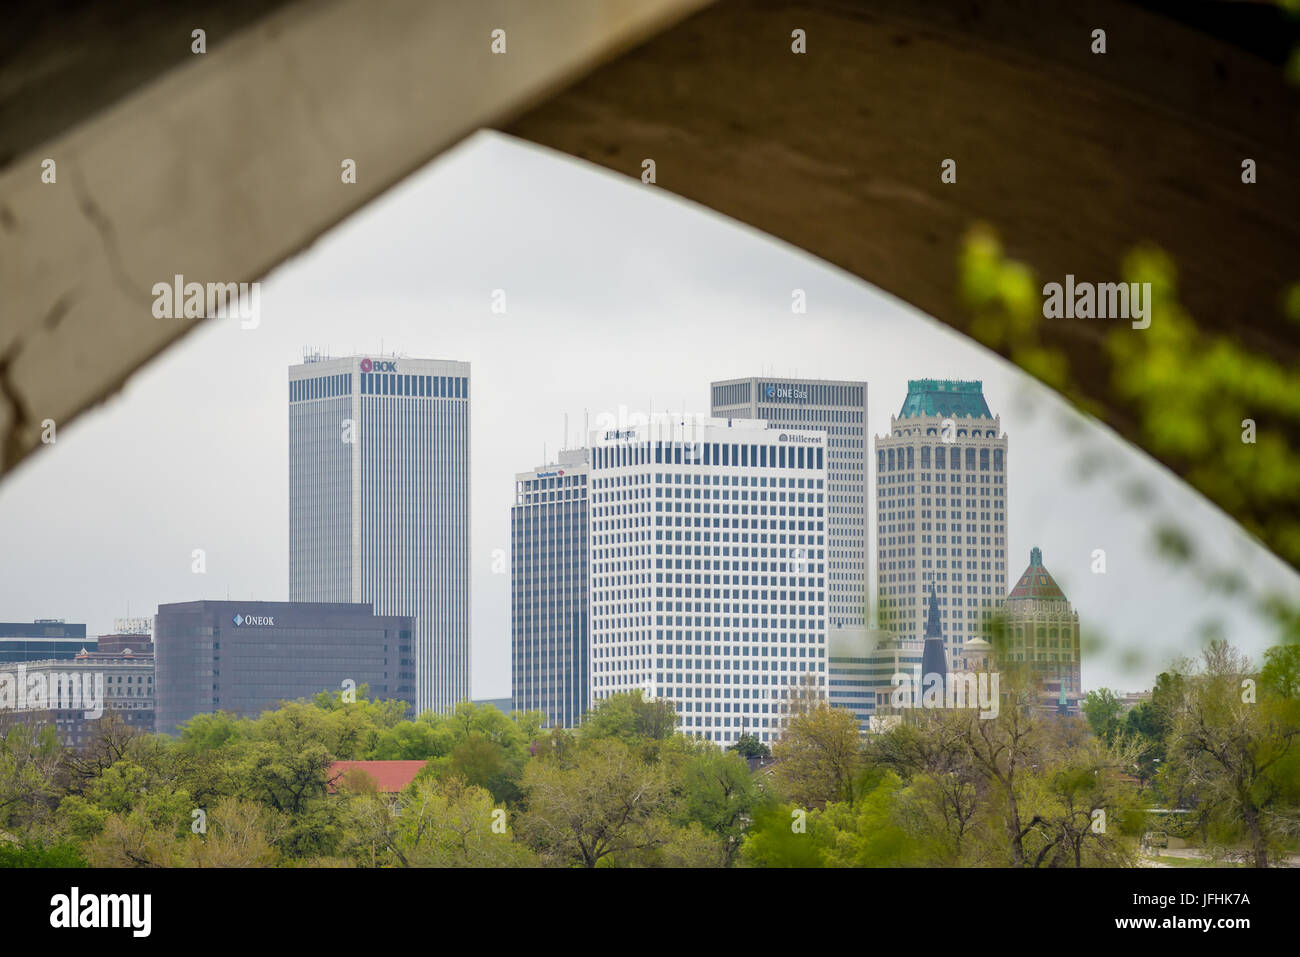 April 2015 - Stormy weather over Tulsa oklahoma Skyline Stock Photo